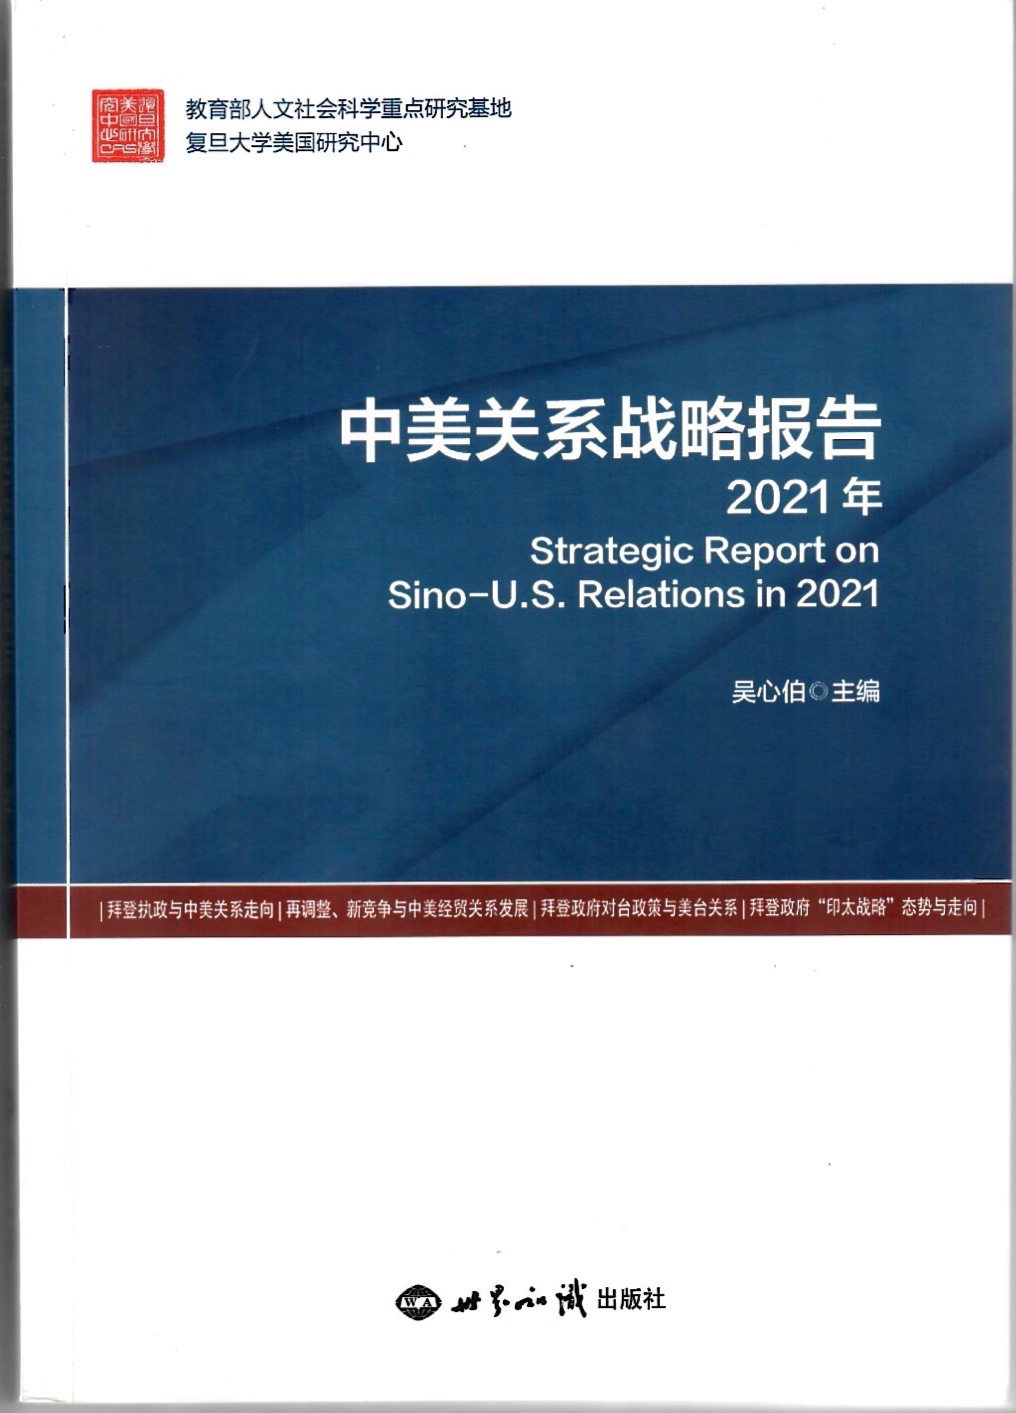 Strategic Report on Sino-U.S. Relations in 2021